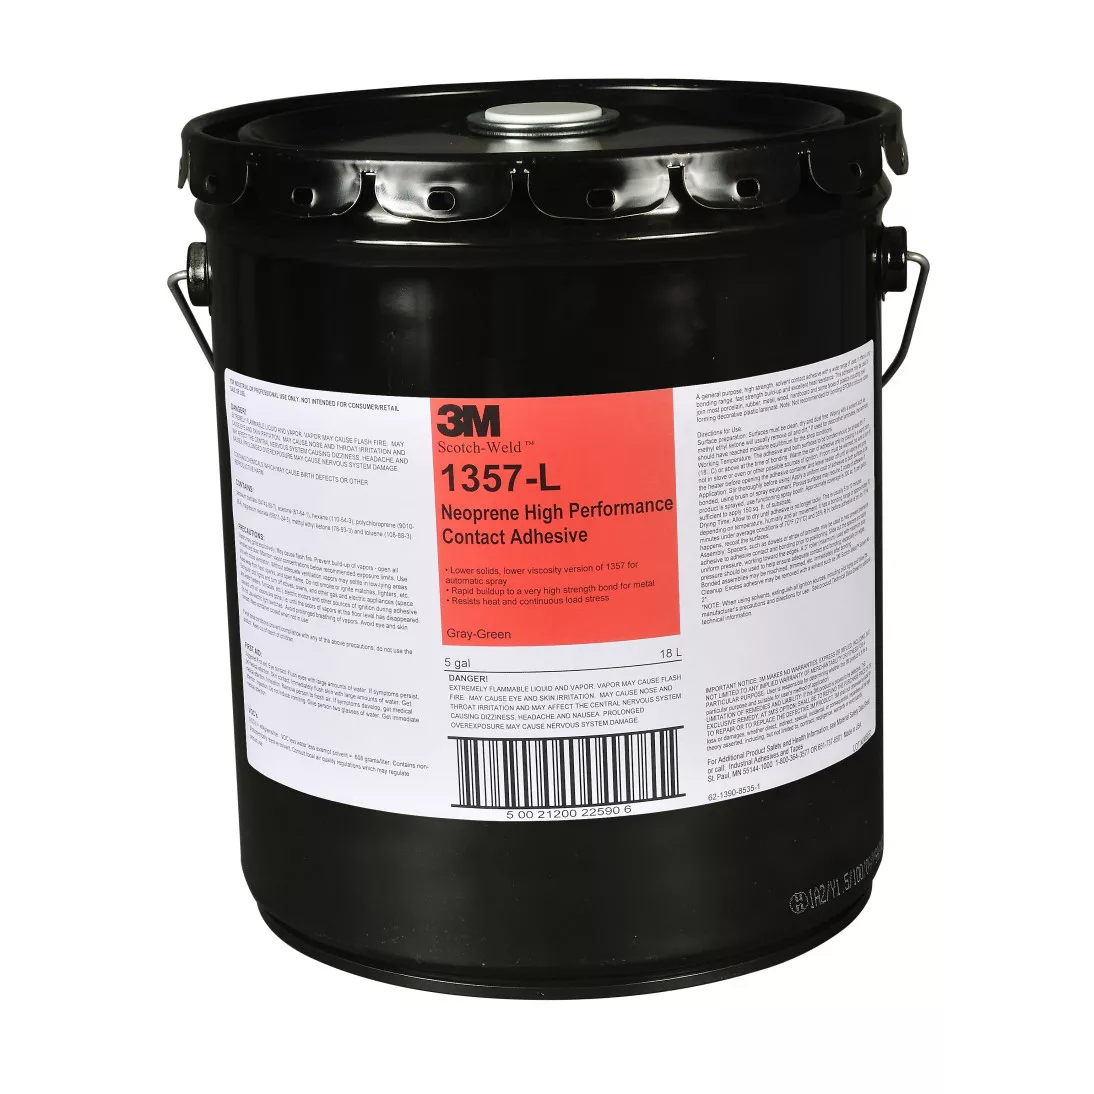 3M™ Neoprene High Performance Contact Adhesive 1357L, Gray-Green, 5
Gallon Drum (Pail)